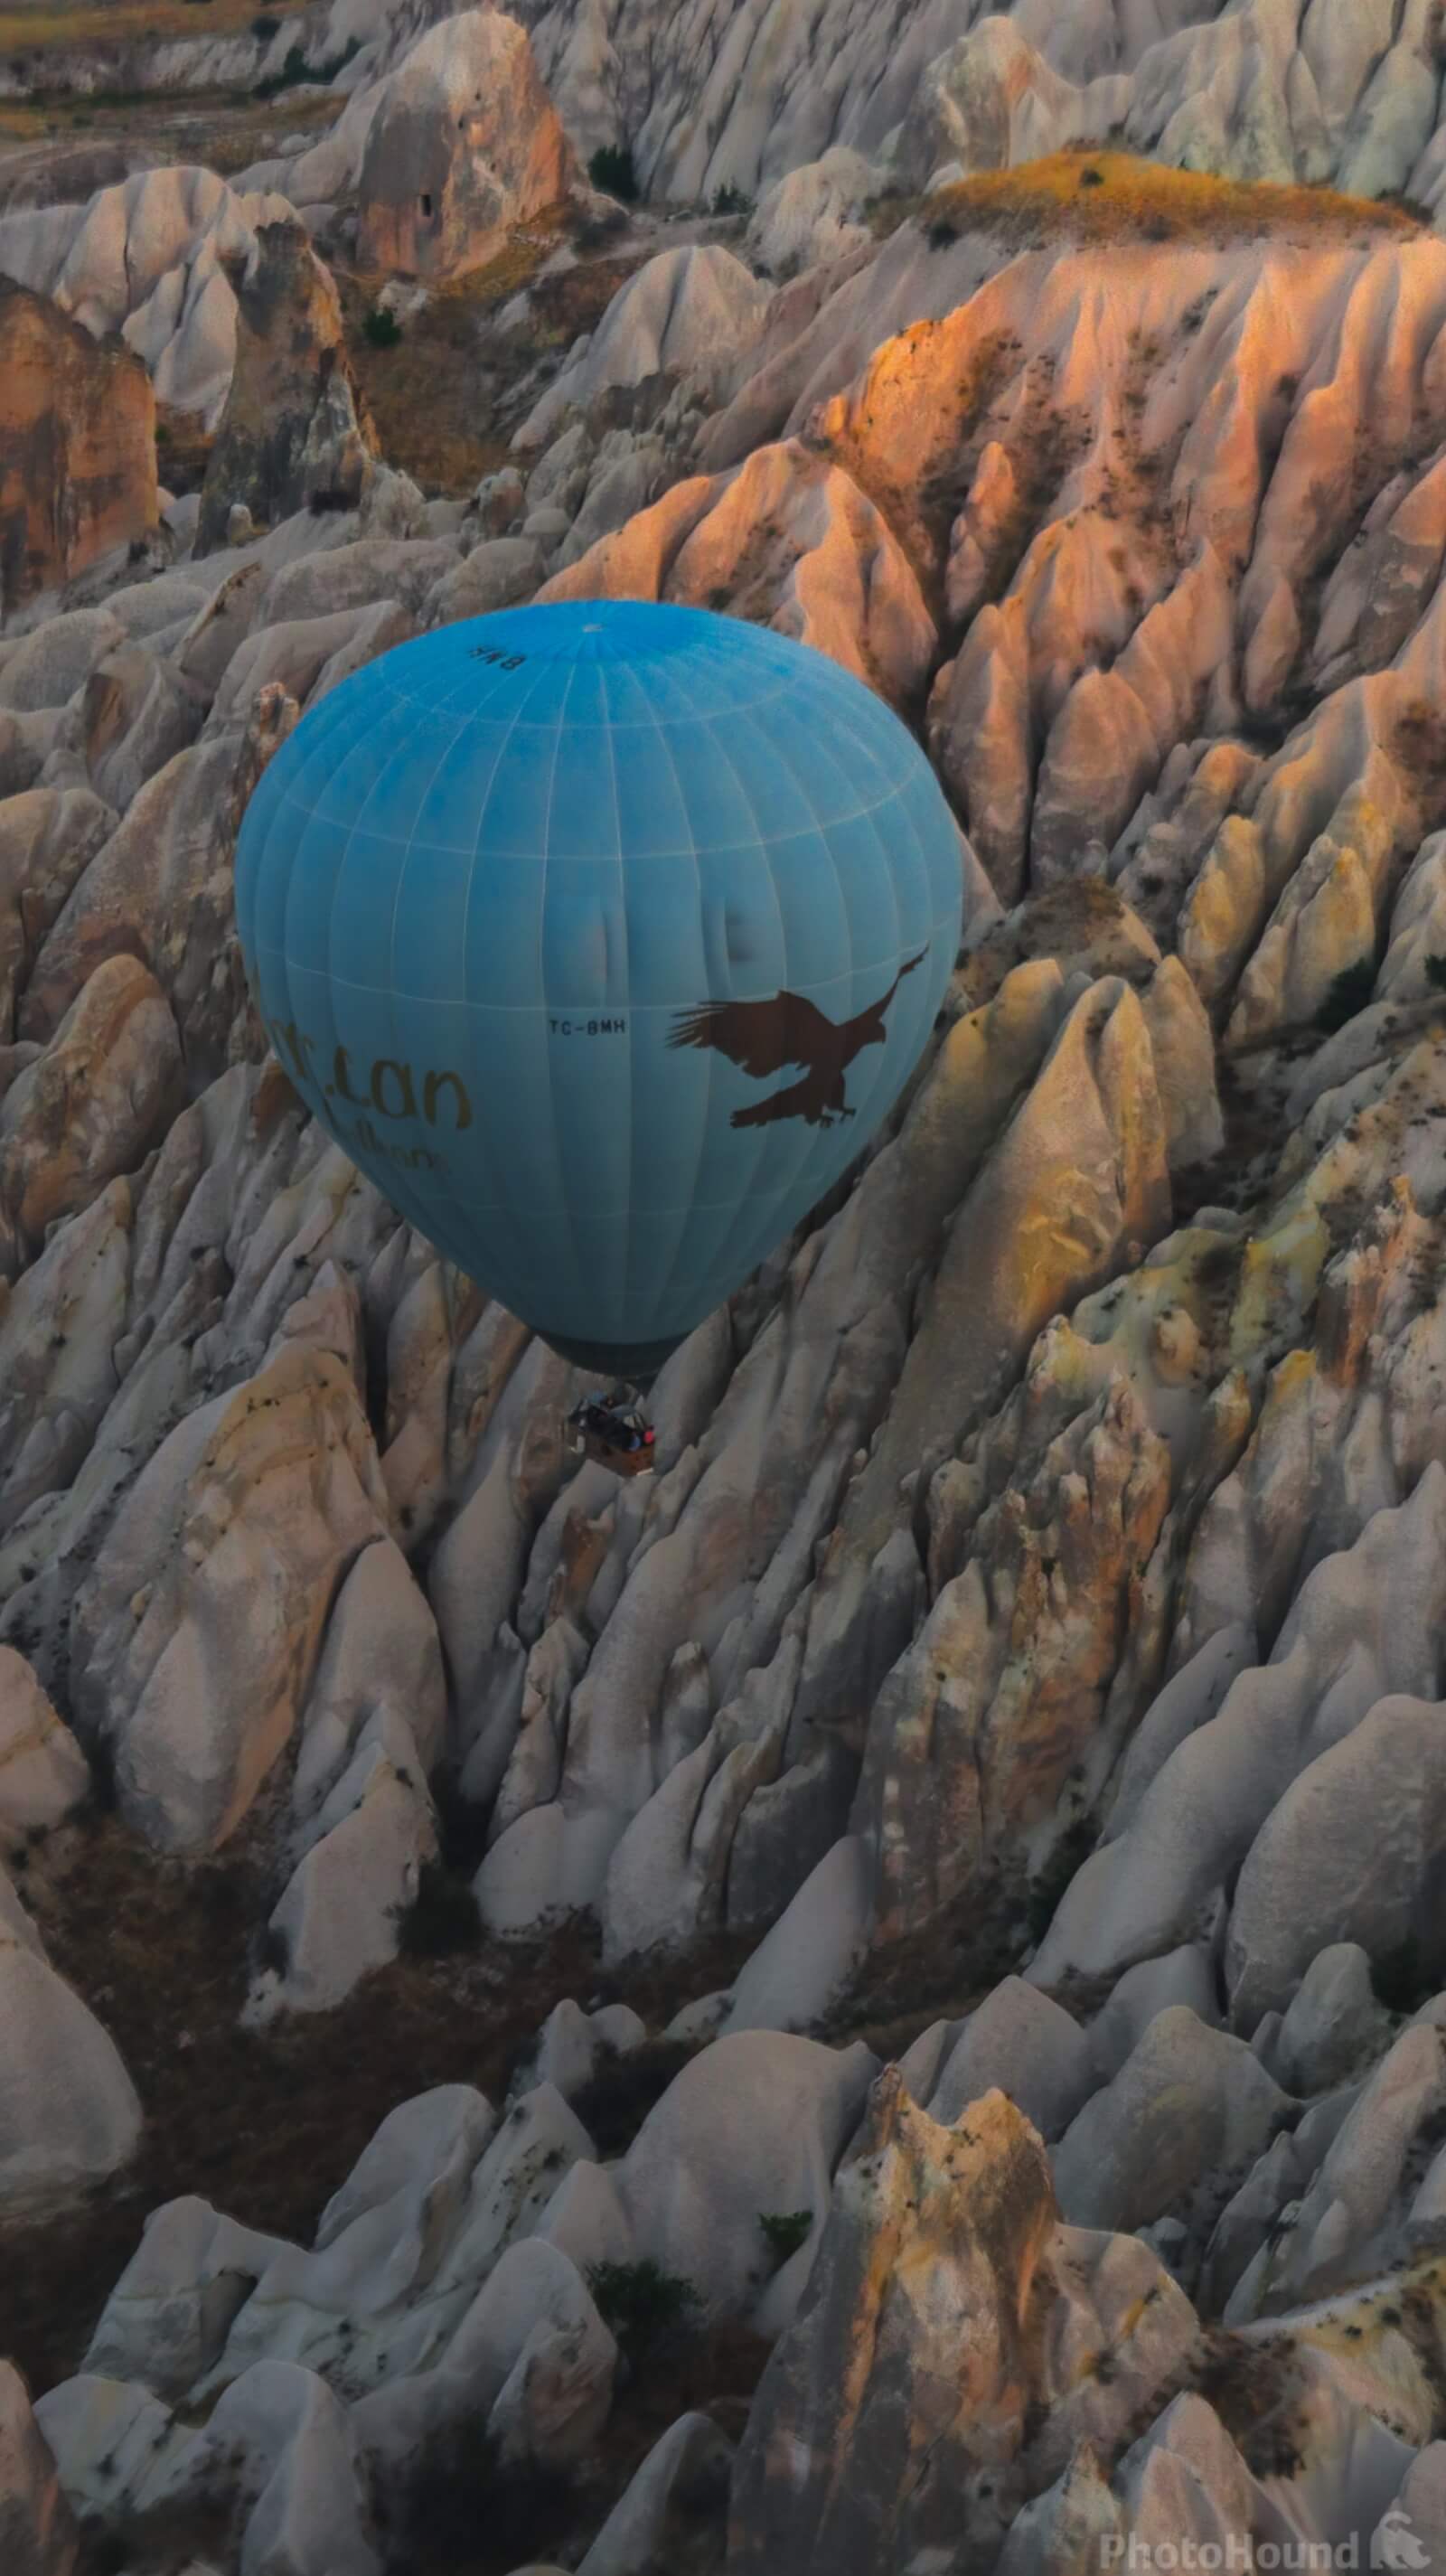 Image of Cappadocia Hot Air Ballooning by Martin Heaps